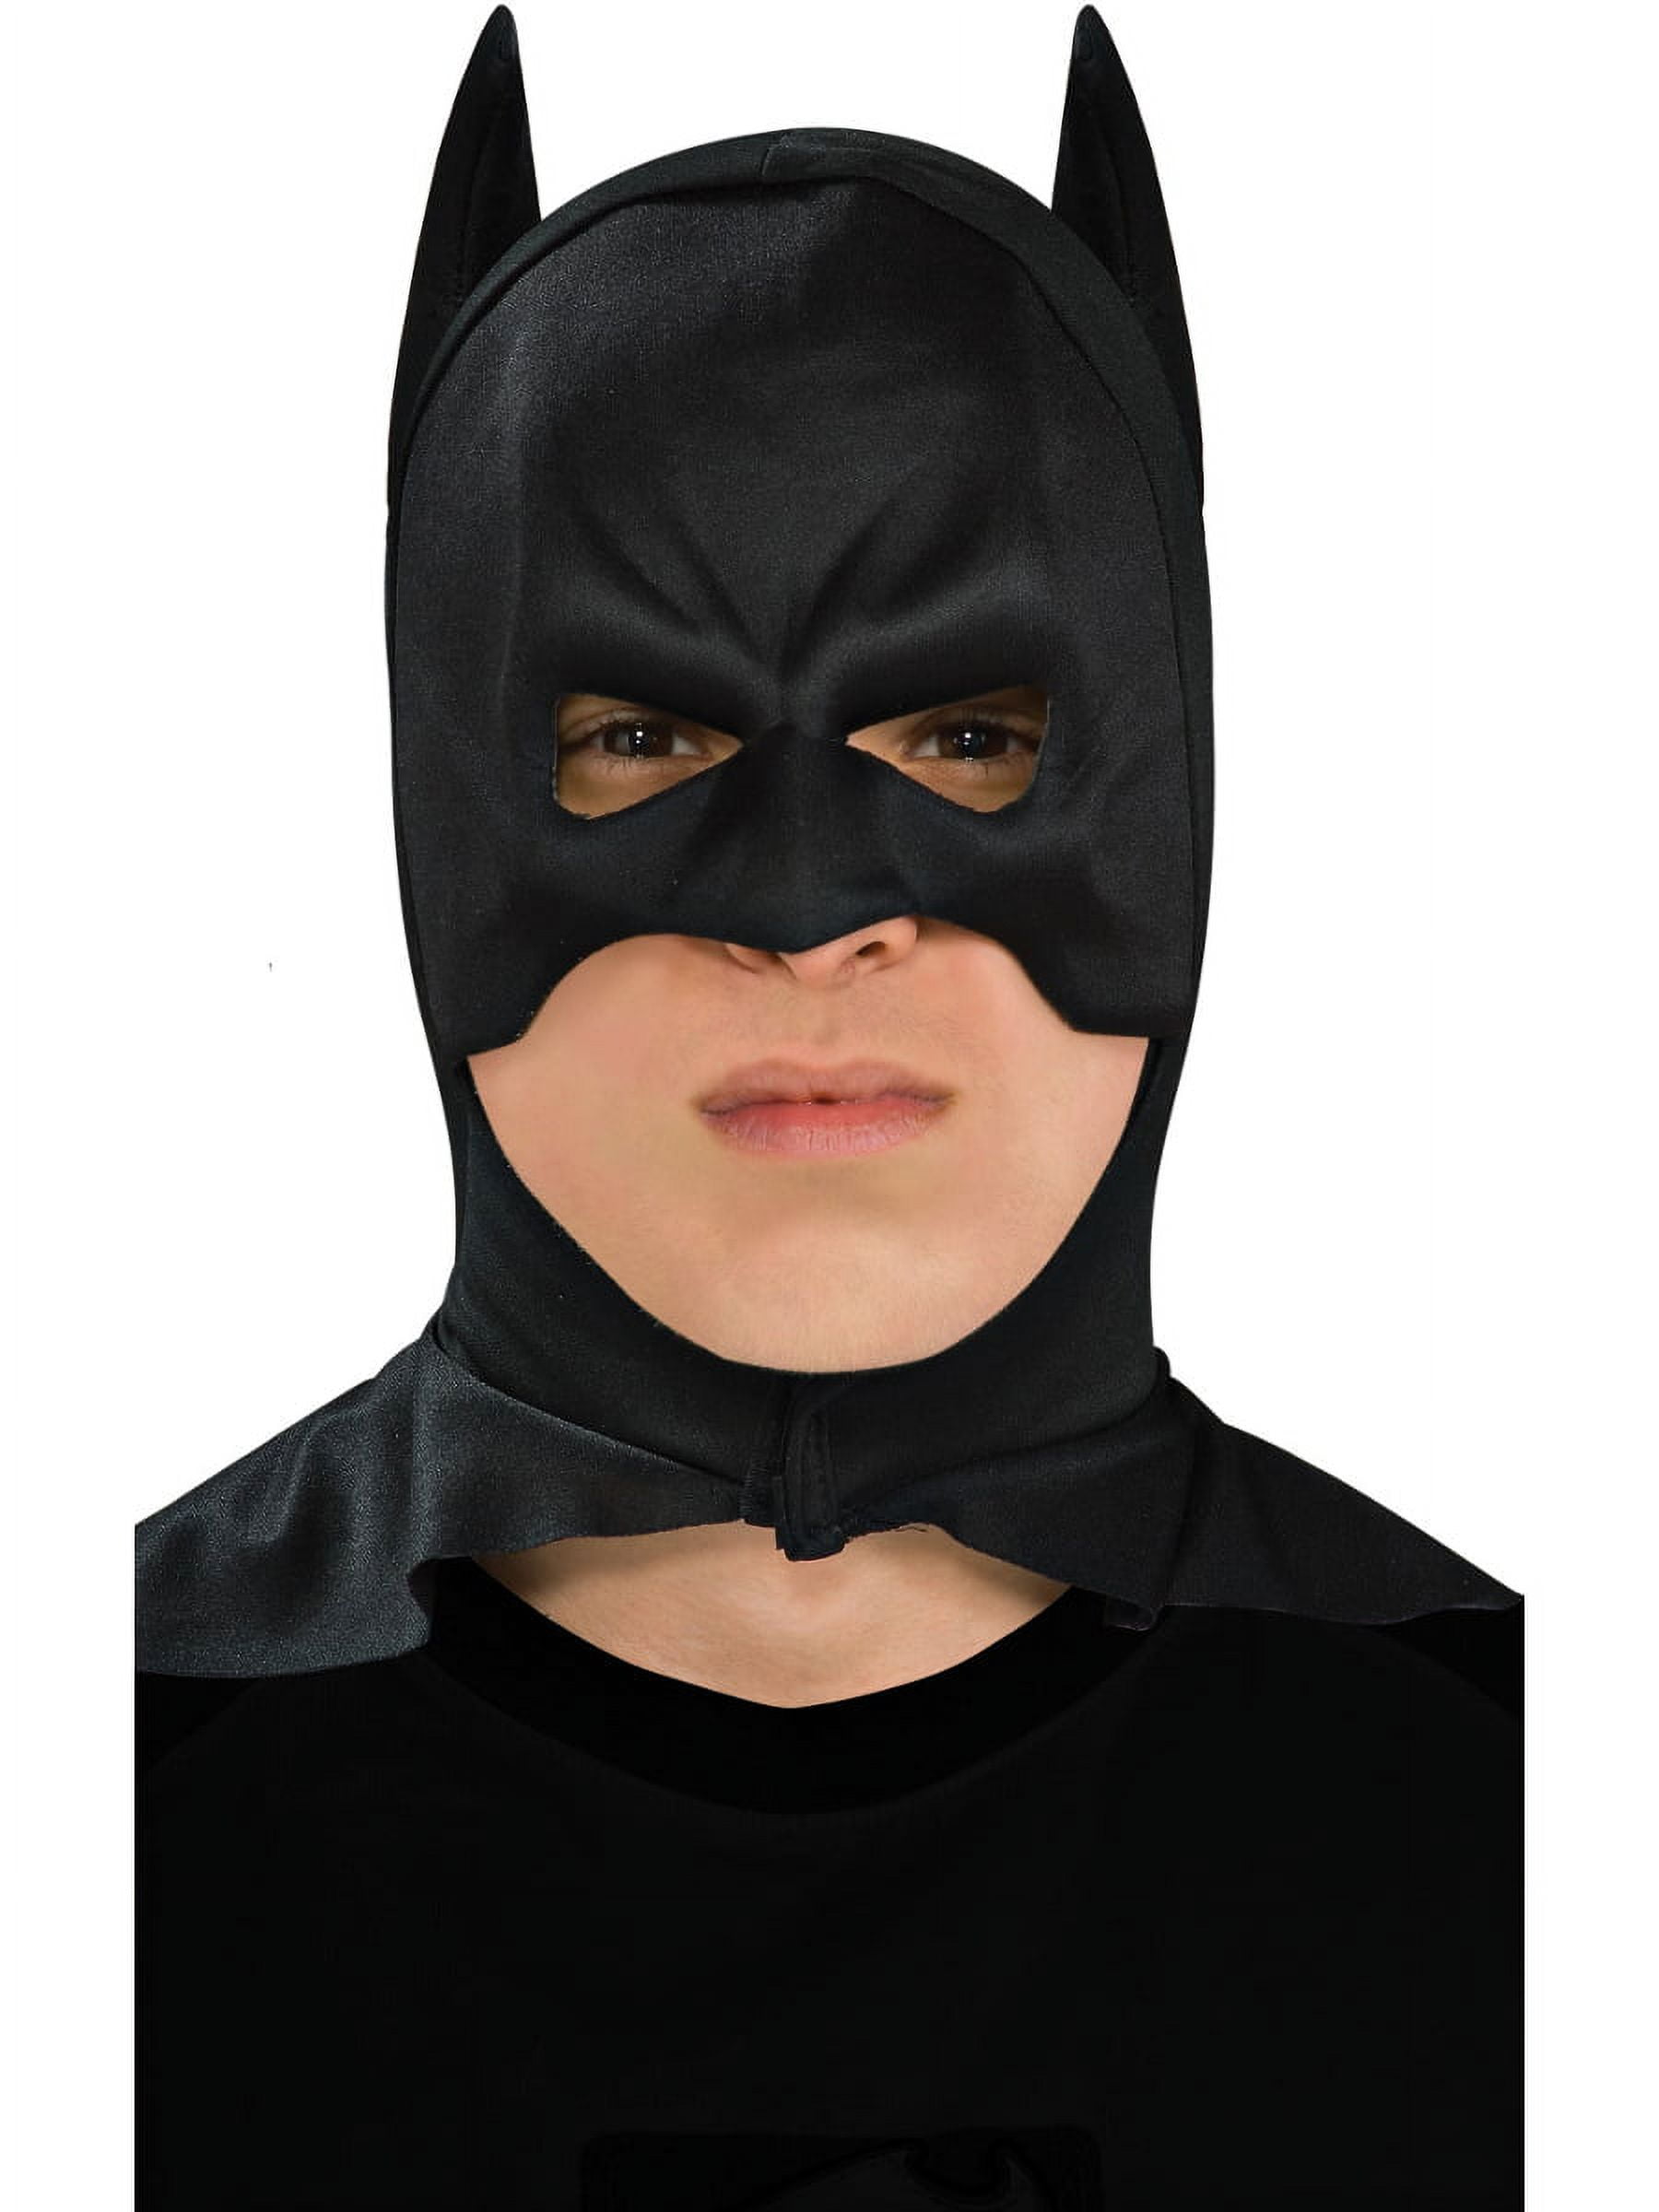 DC Comics Batman Black Plastic Halloween Costume Mask, for Adult 